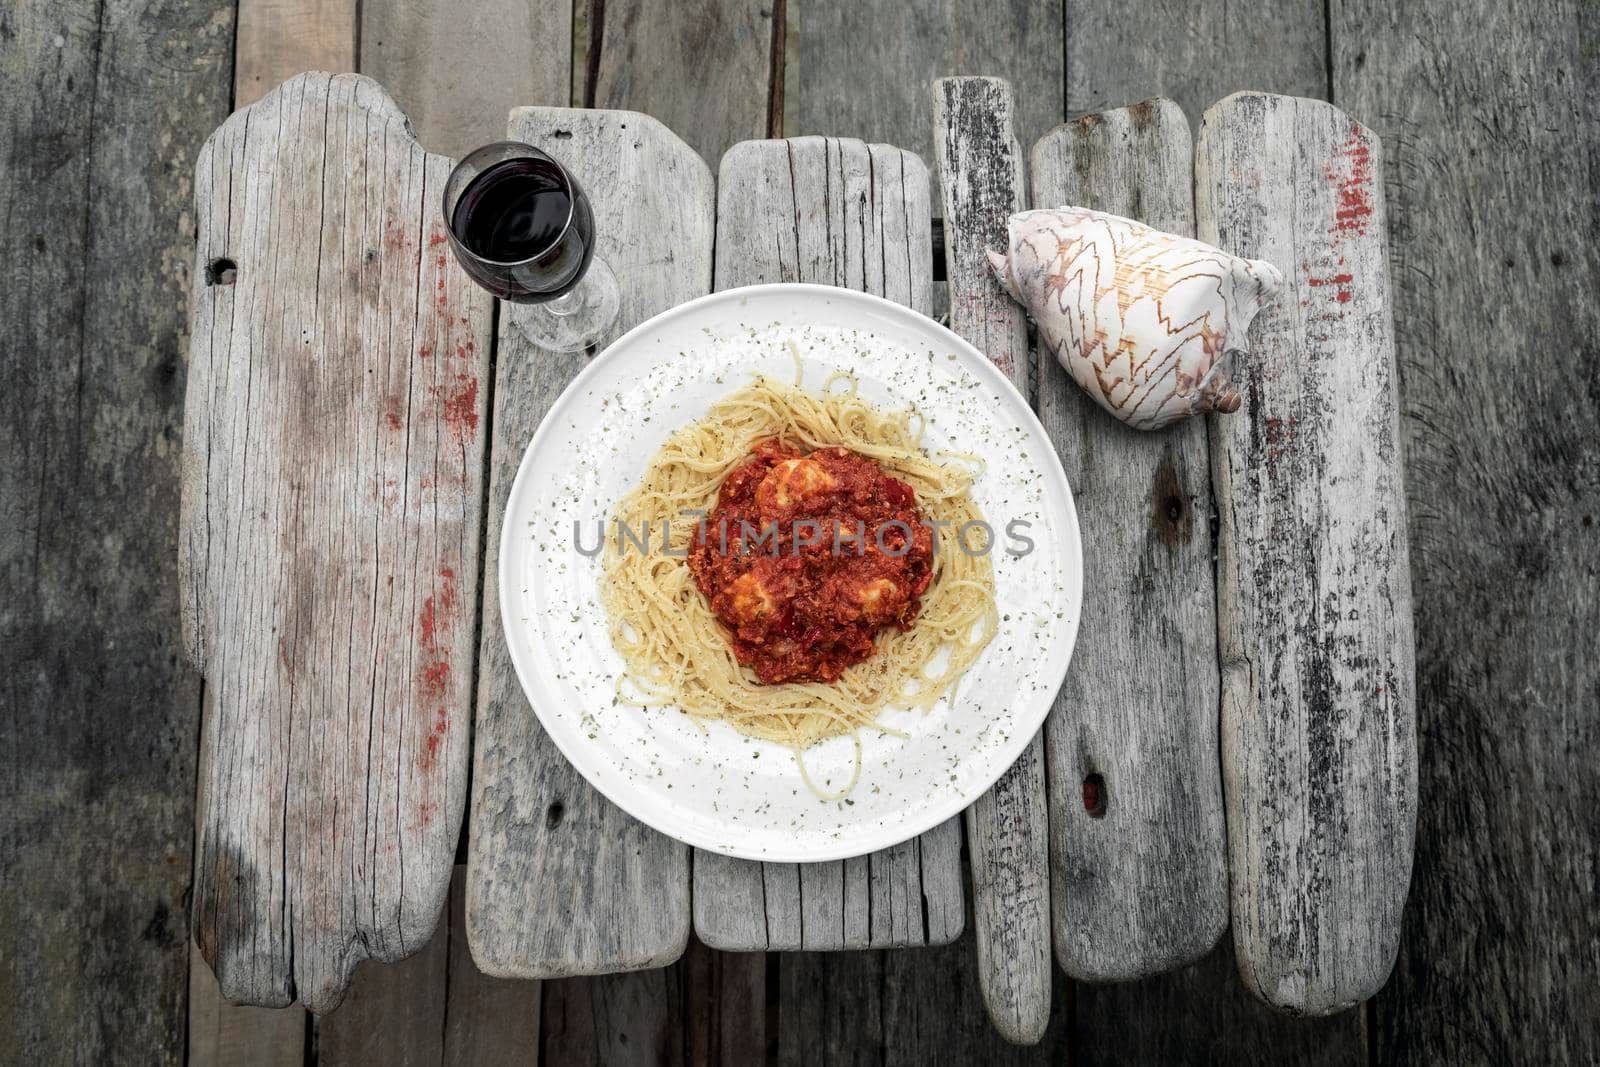 mozzarella bocconcini balls in tomato and vegetable ragu sauce with spaghetti by jackmalipan